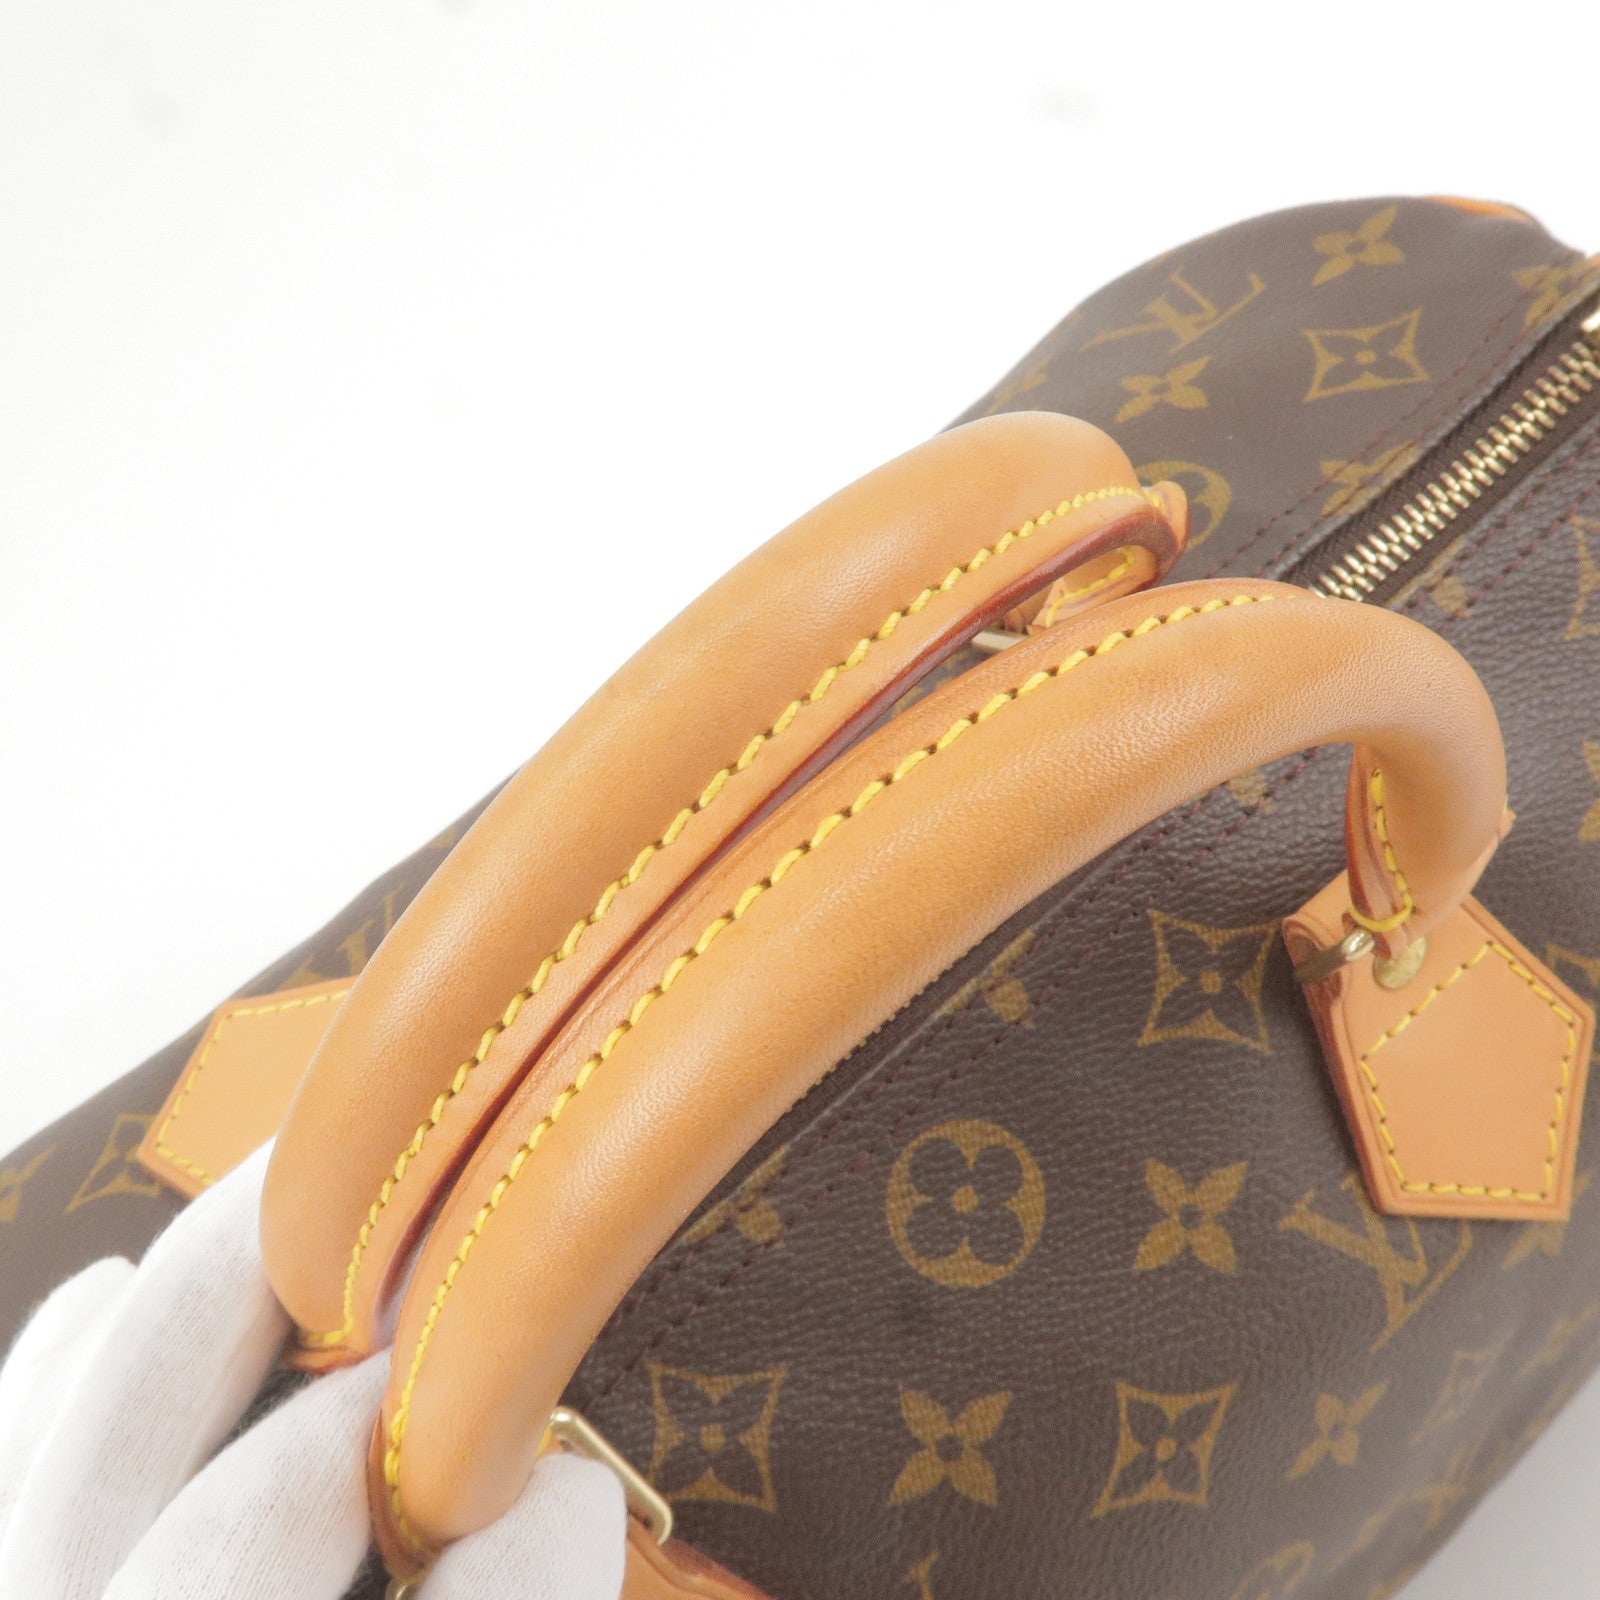 LV Louis Vuitton M41526 Speedy 30 Woman Lady Handbag--09